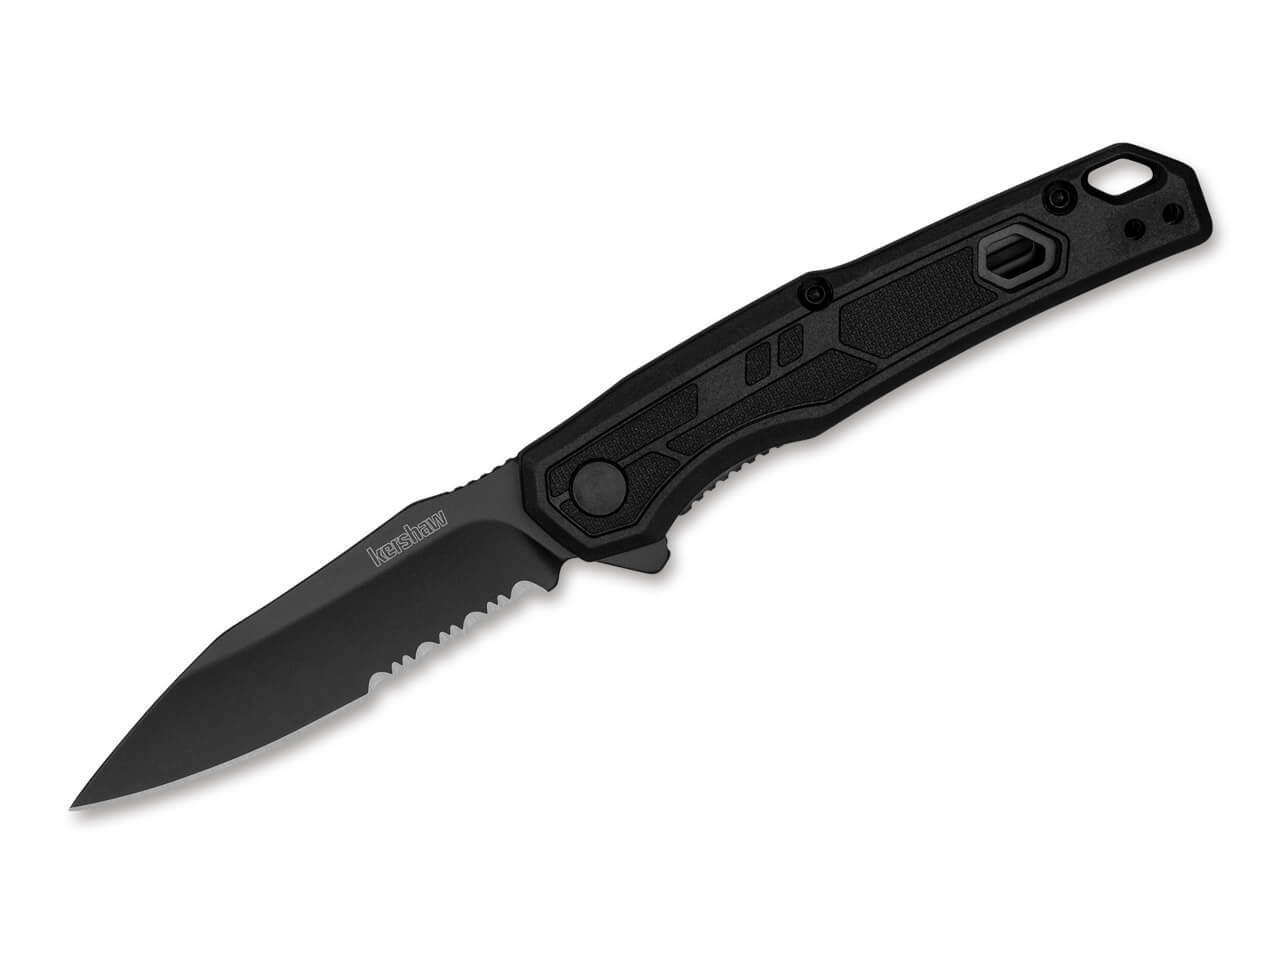  Kershaw Appa Folding Tactical Pocket Knife, SpeedSafe